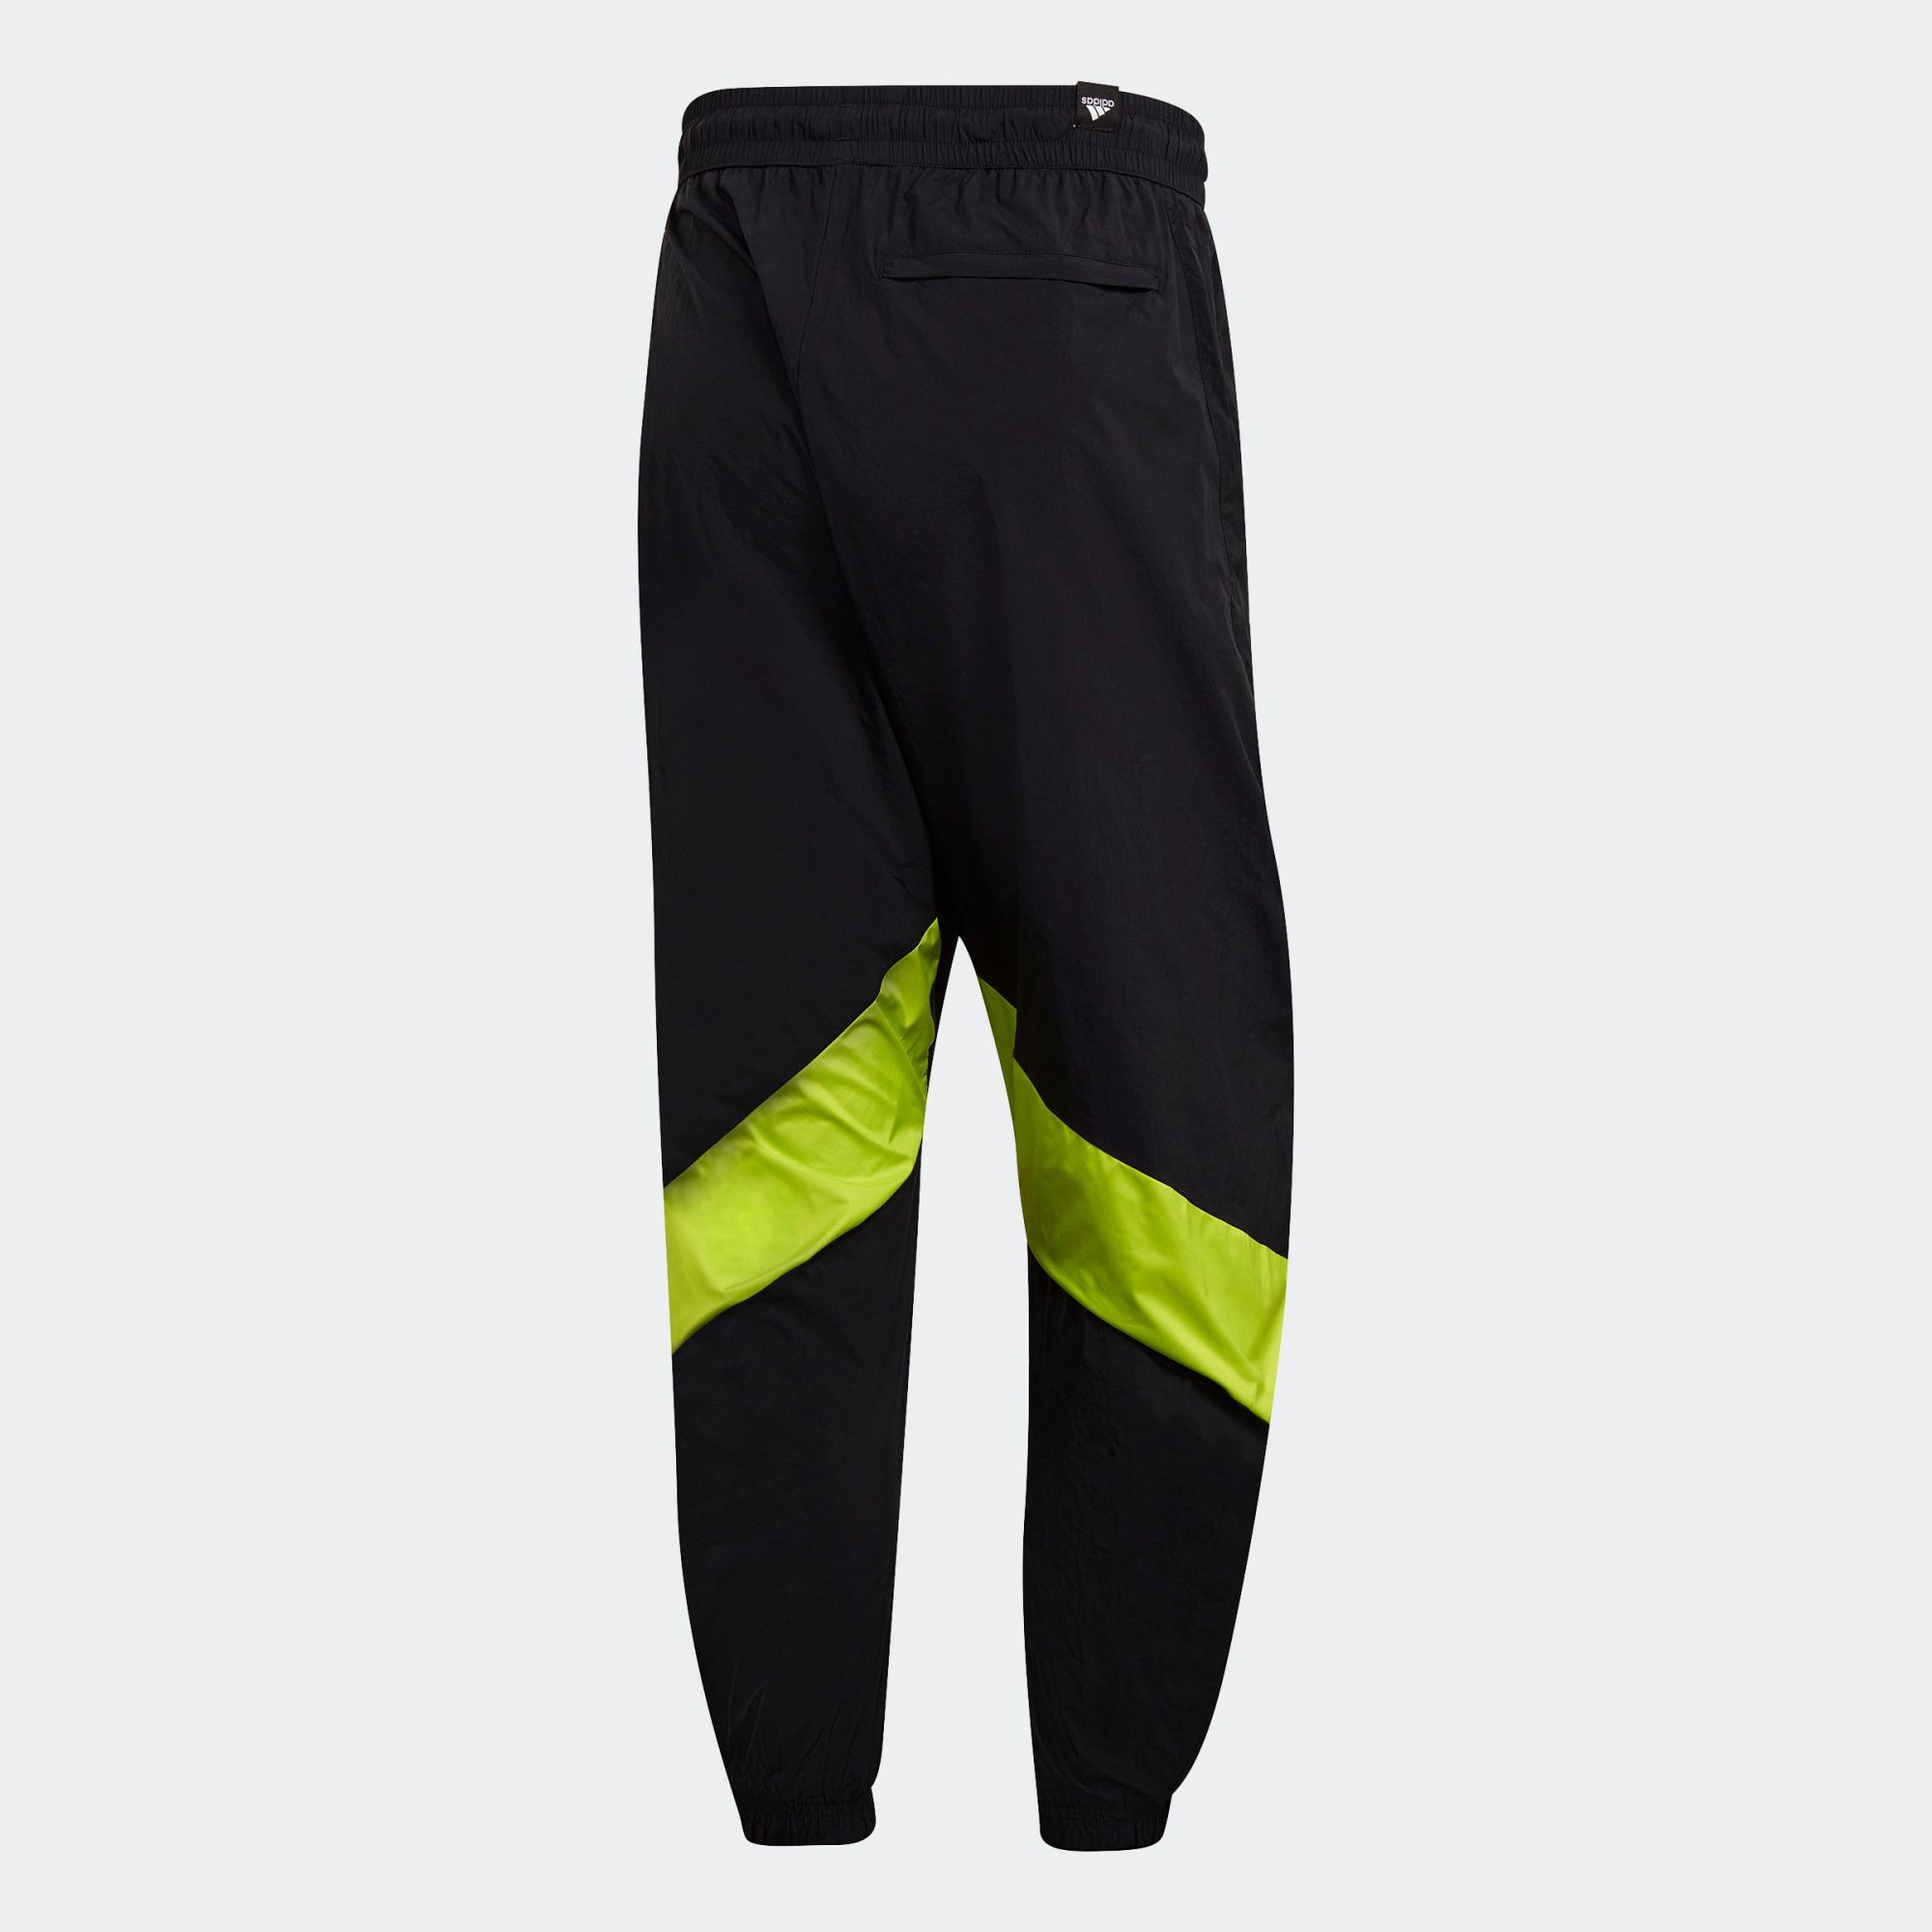  adidas Woven Tape Pants - Black/Solar Lime 